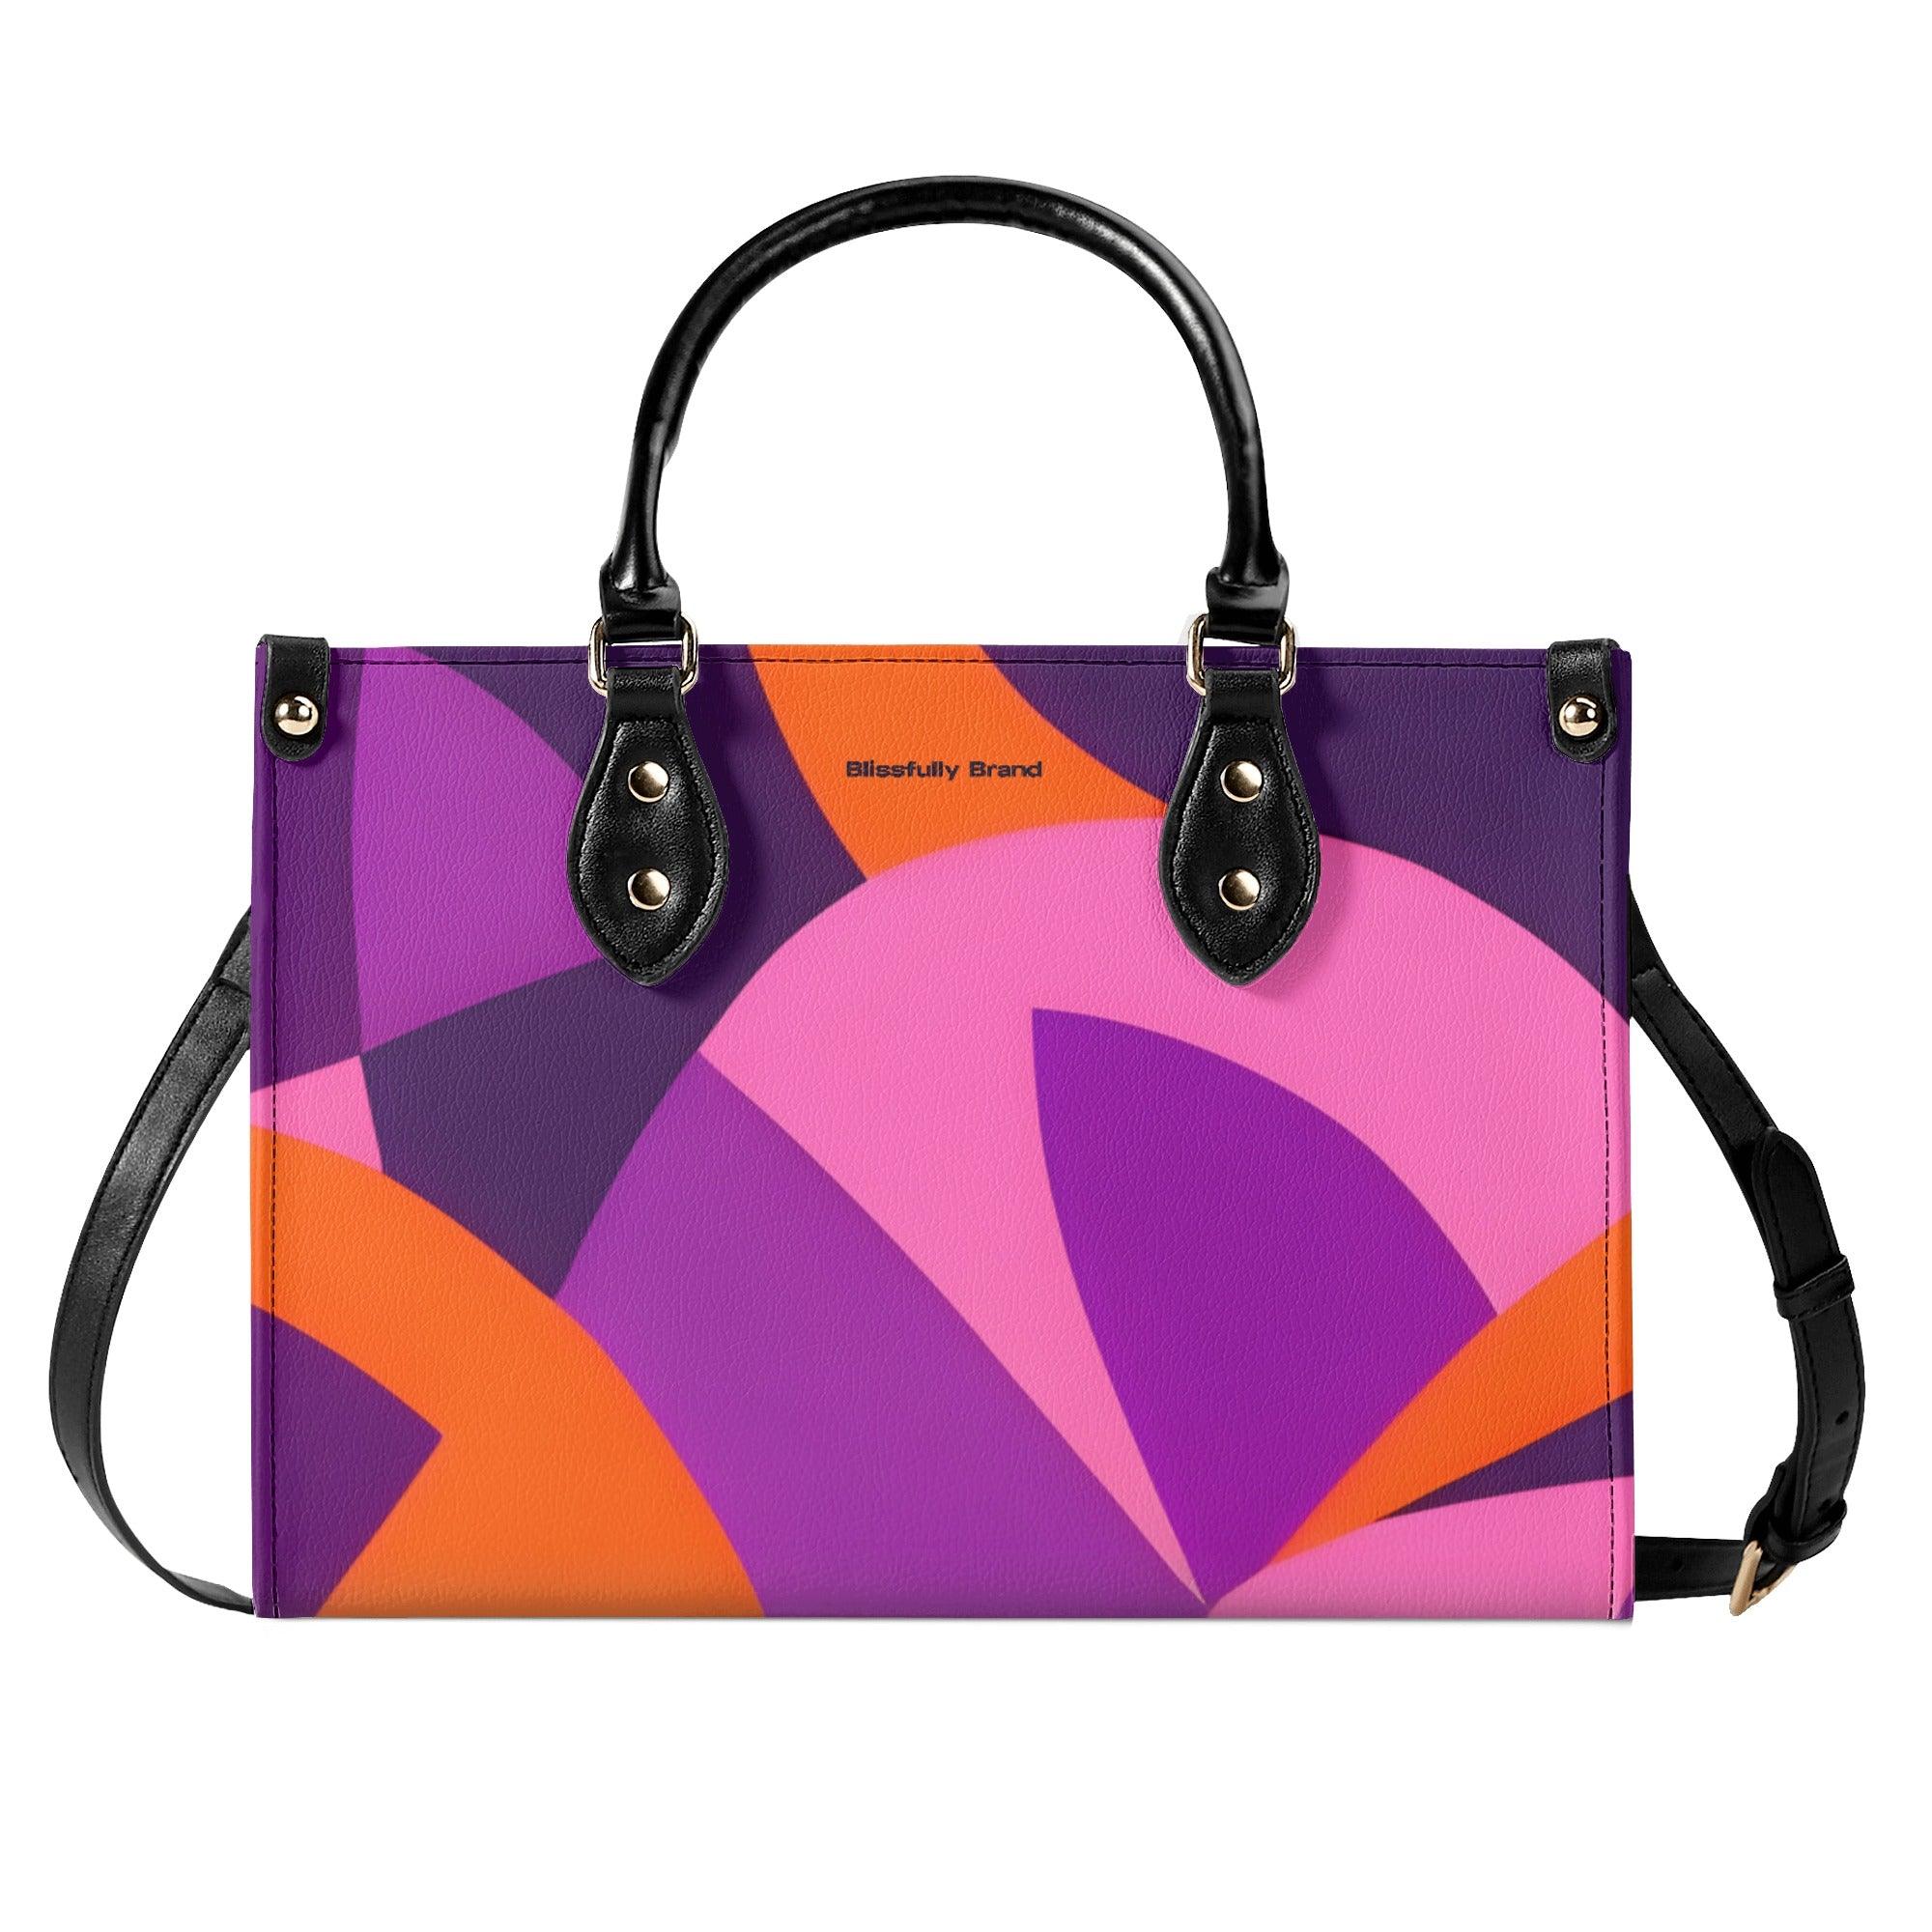 Airline Series 239 Box Satchel - Abstract Geometric Violet Pink Orange Mod Retro Bold Vibrant Funky Black Faux Leather Vegan Handbag Shoulder Bag Blissfully Brand Psychedelic 70's pop art